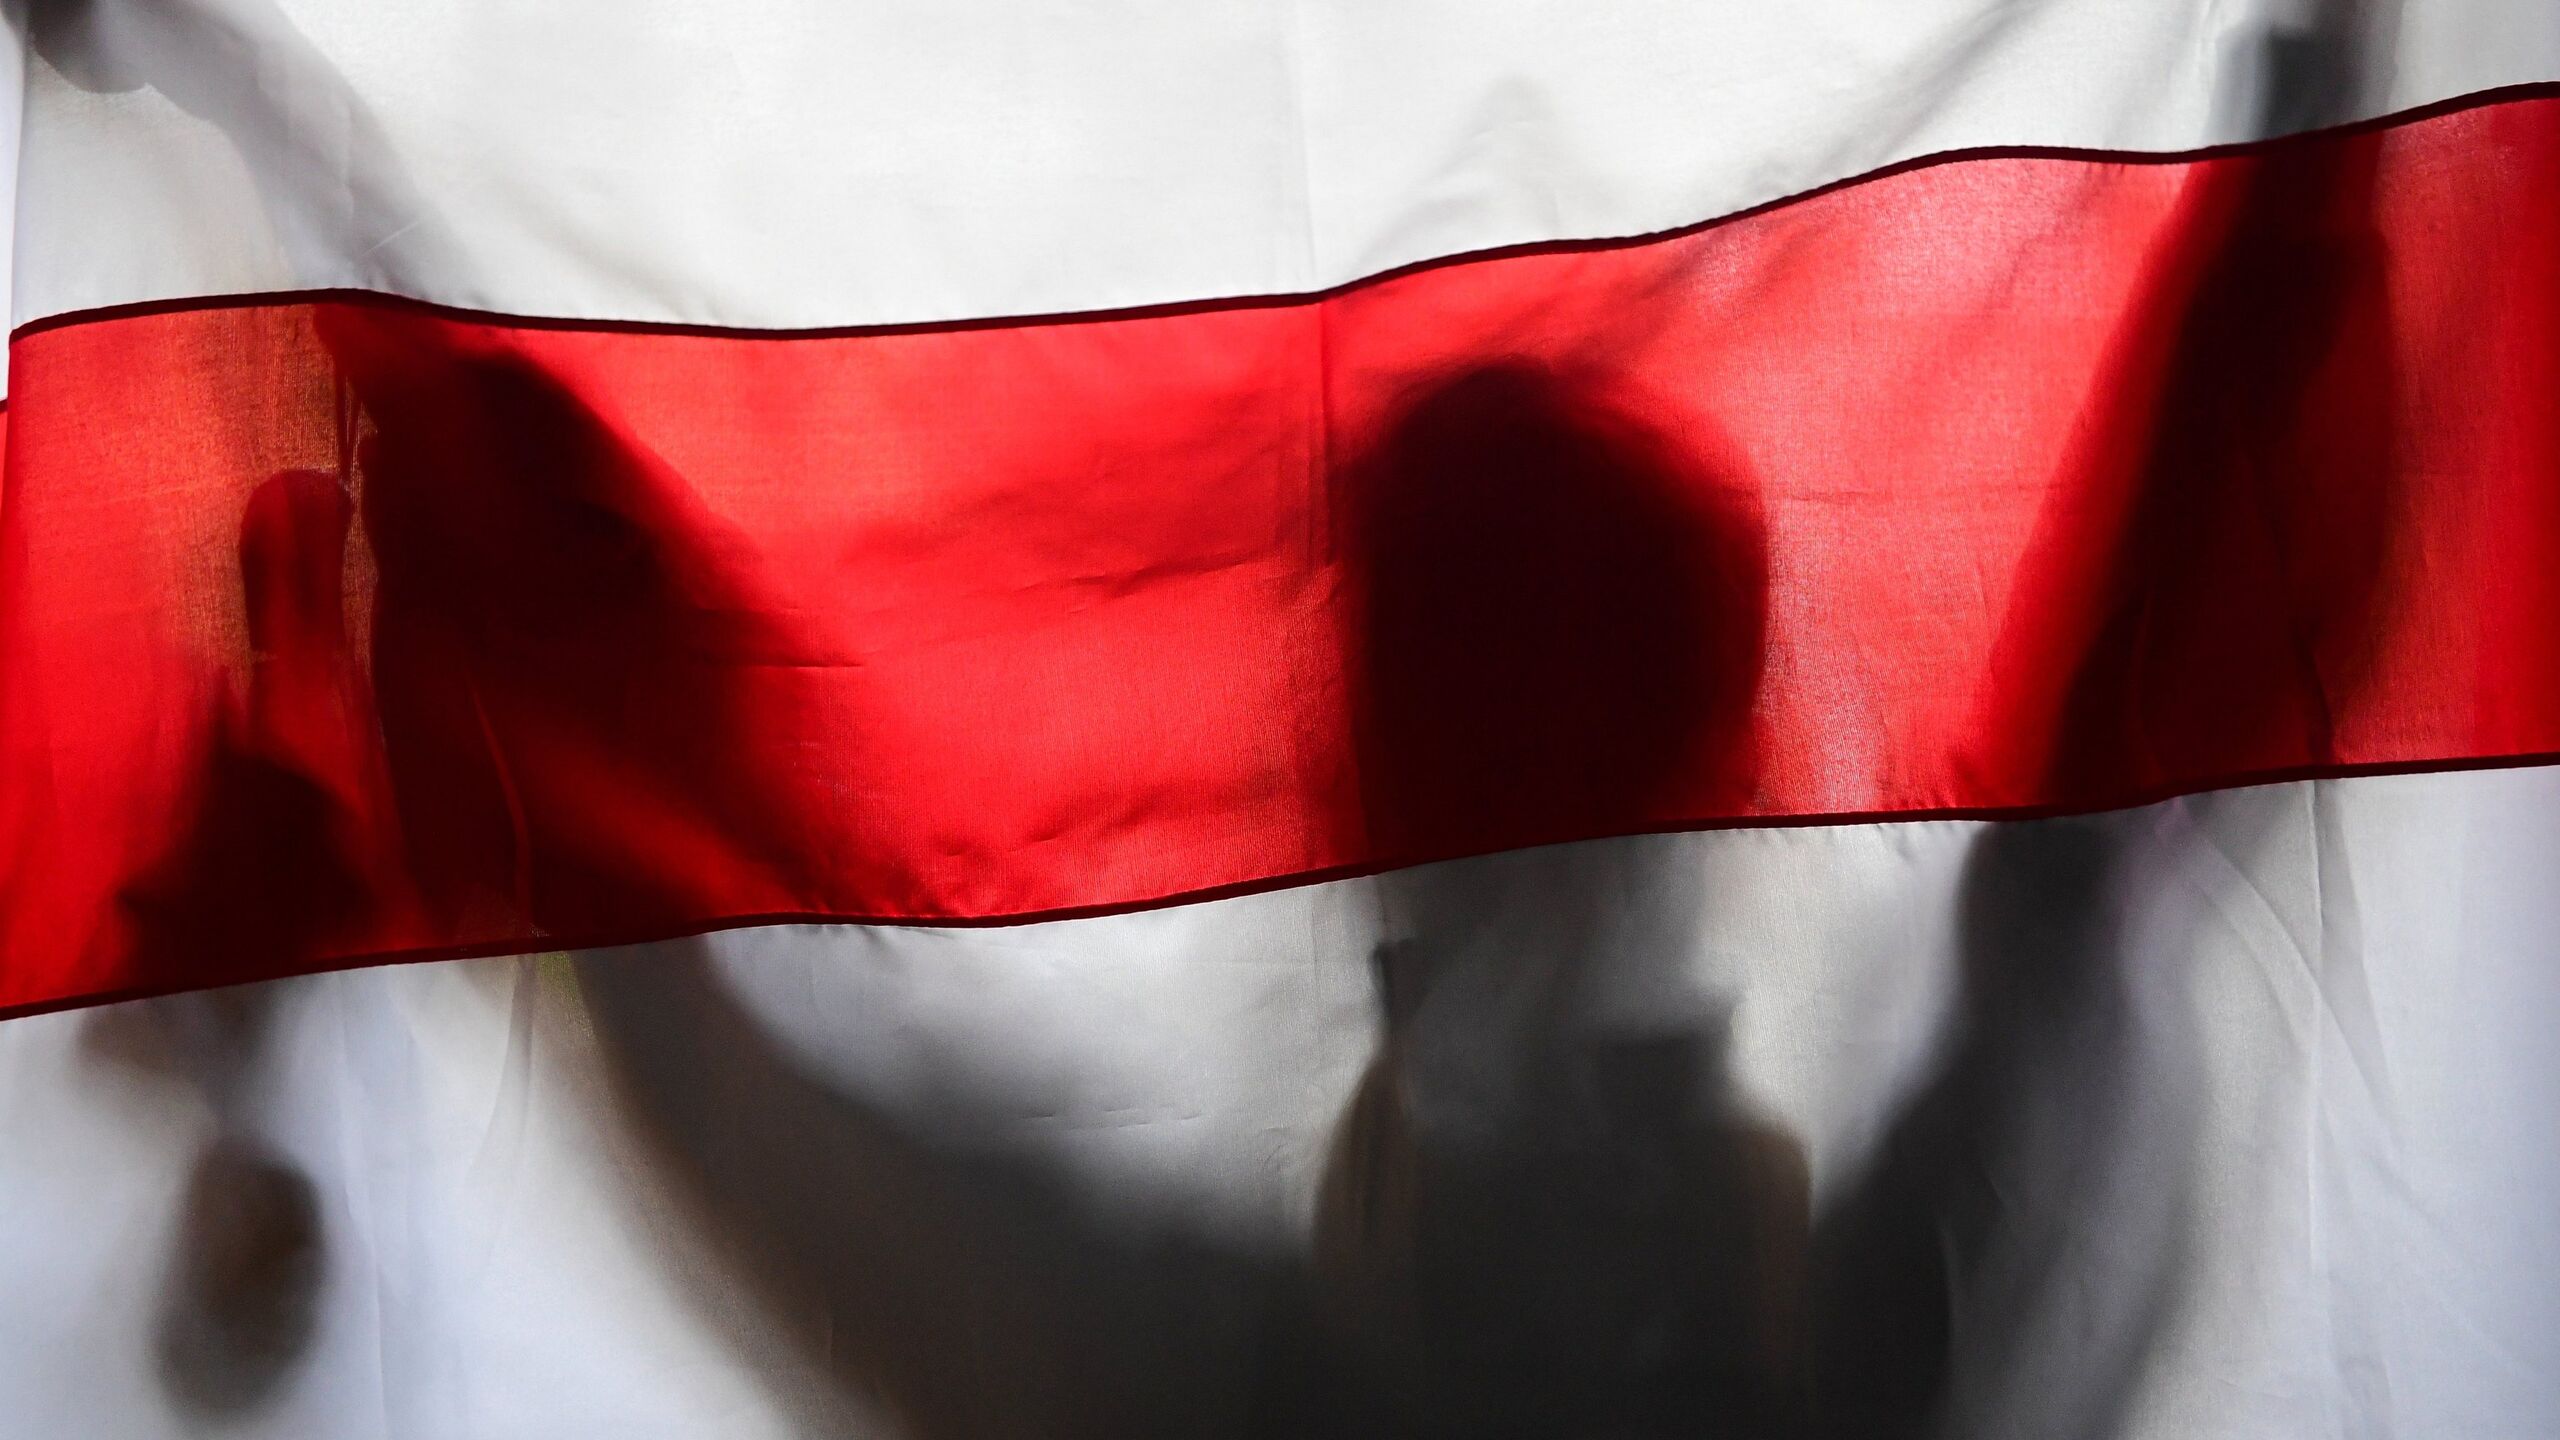 Фото флага бело красно белый. БЧБ флаг. Флаг Белоруссии БЧБ. Флаг белорусской оппозиции бело красно белый. Белорусский флаг БЧБ.